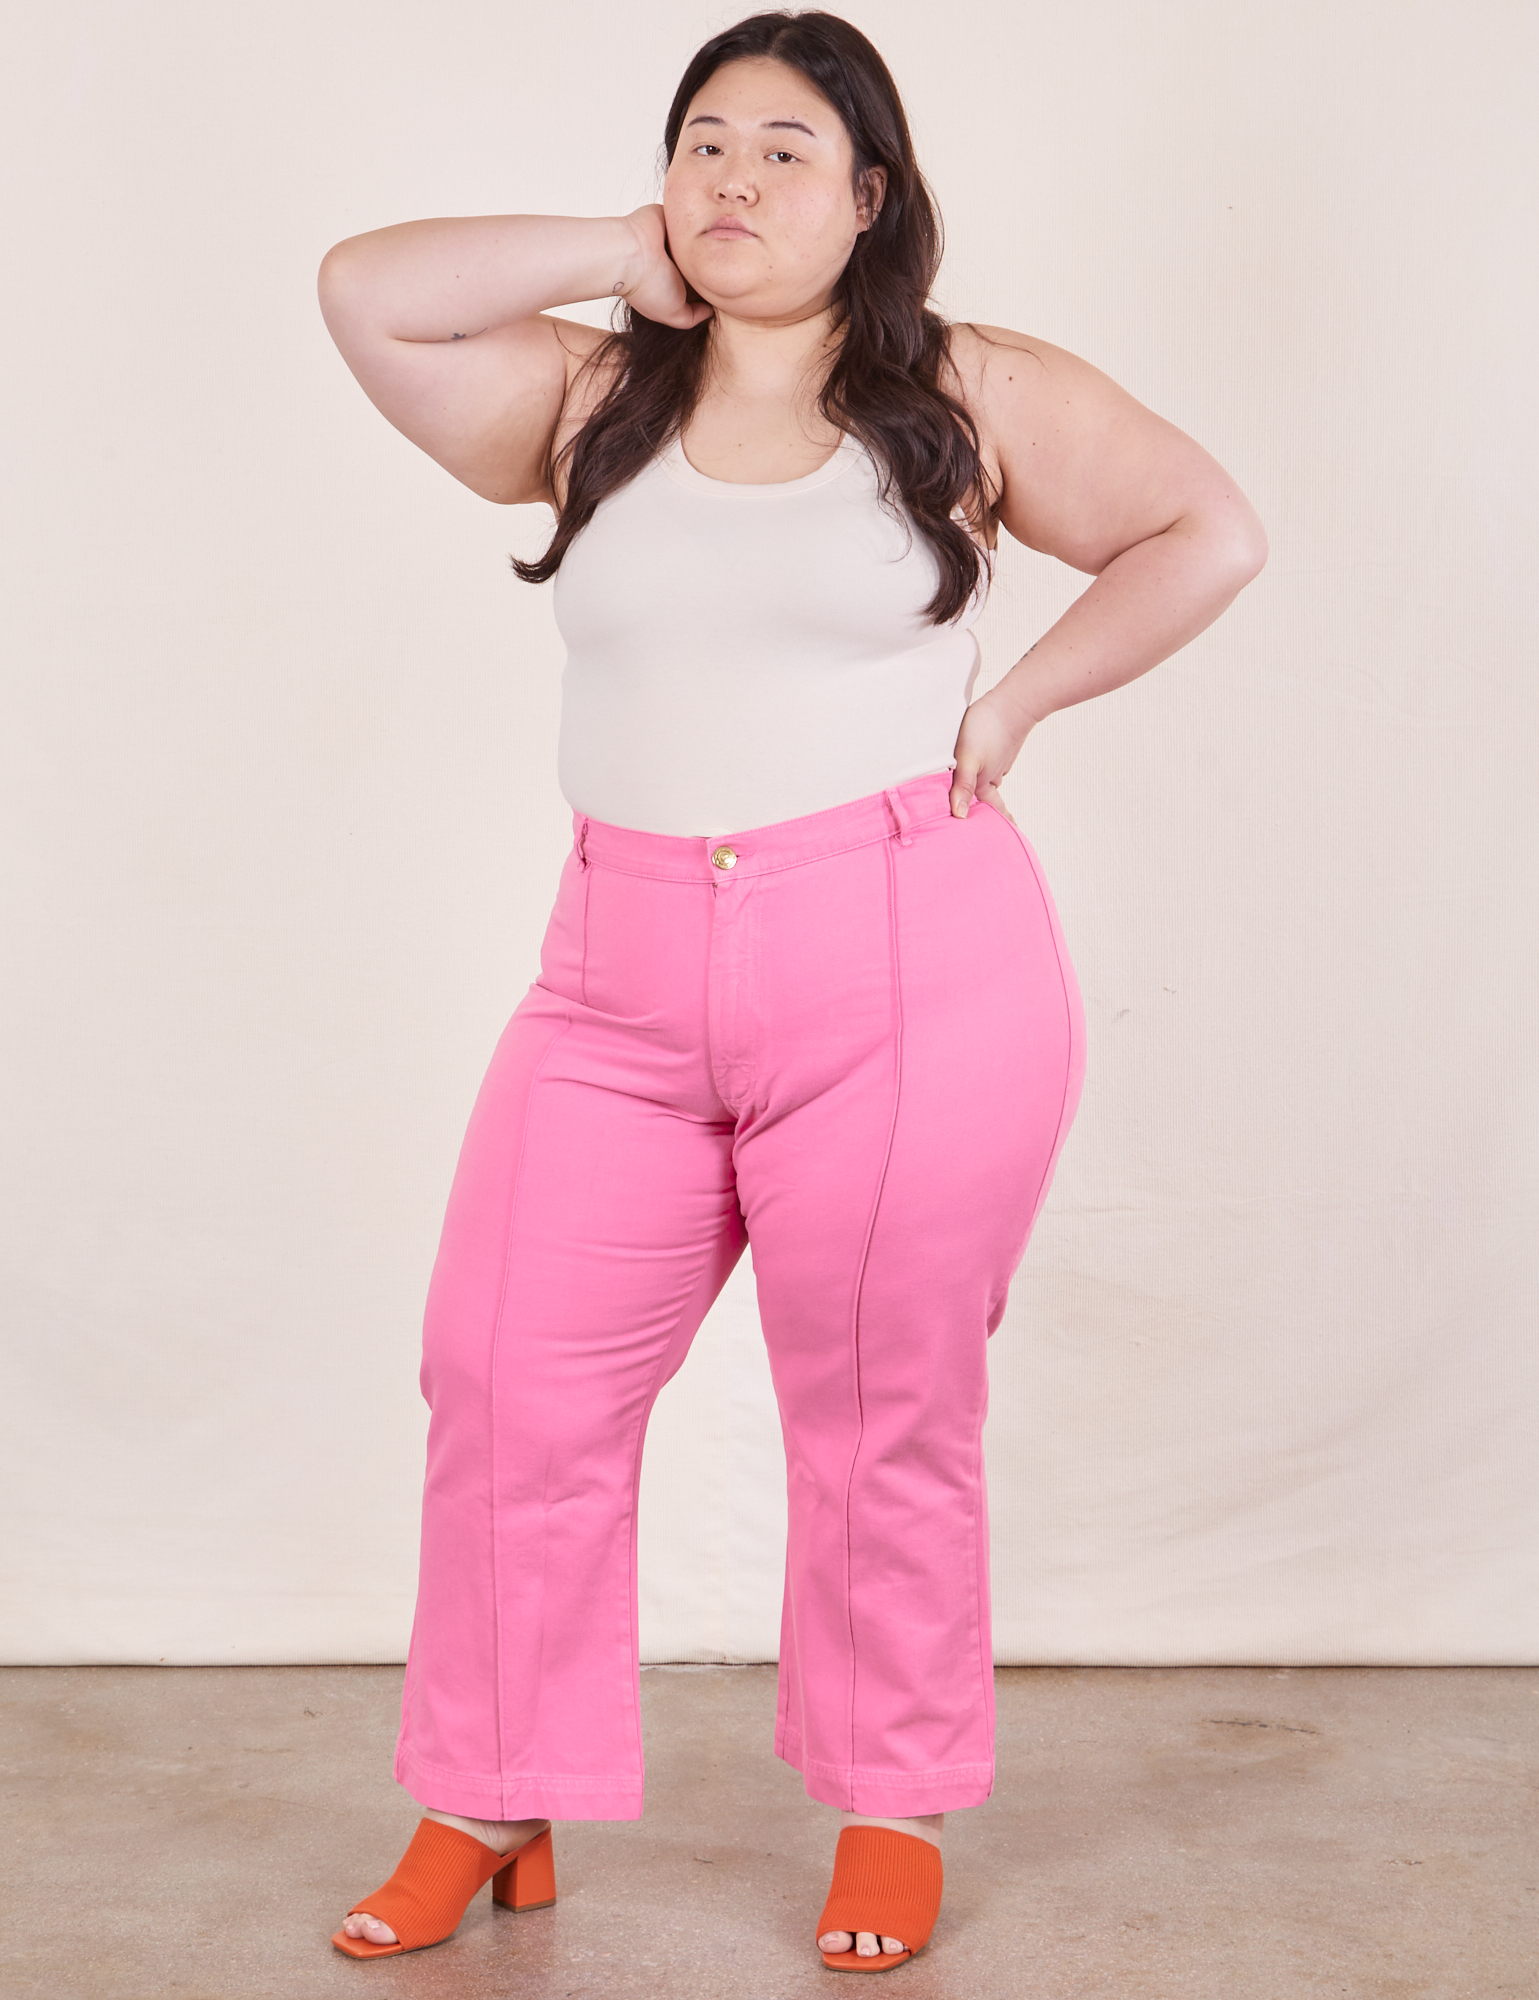 Western Pants in Bubblegum Pink on Ashley wearing vintage off-white Tank Top